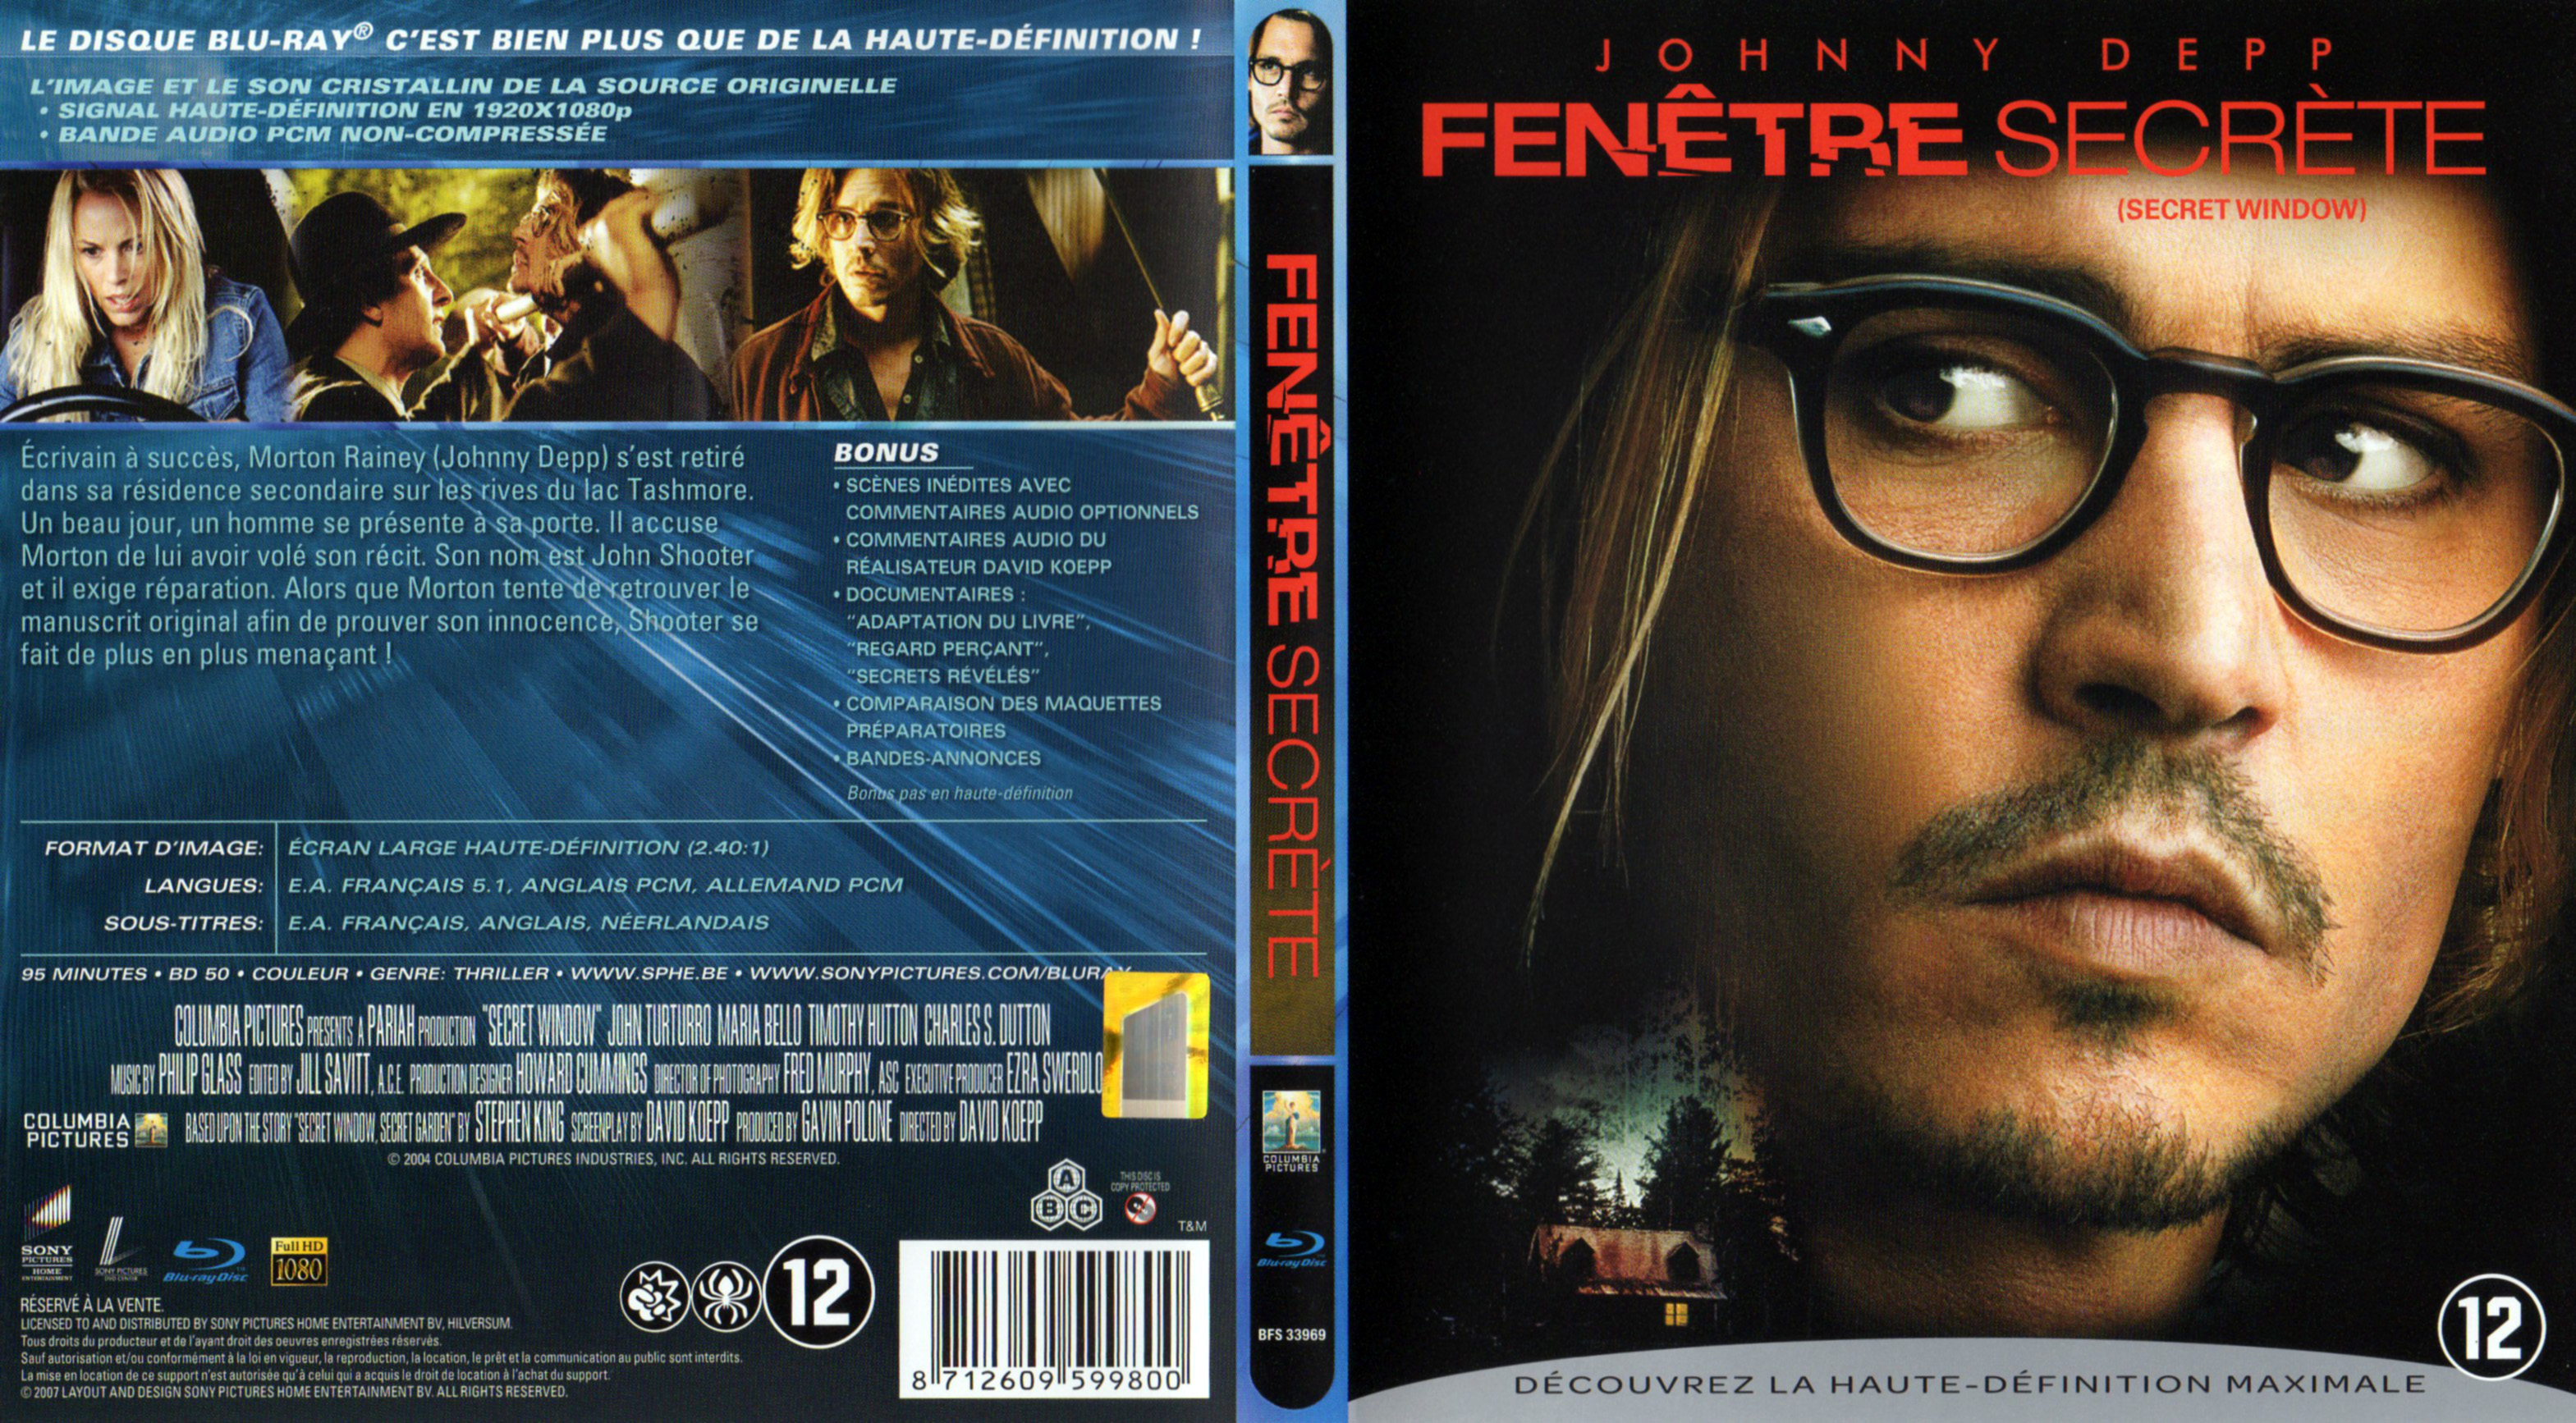 Jaquette DVD Fenetre secrete (BLU-RAY)